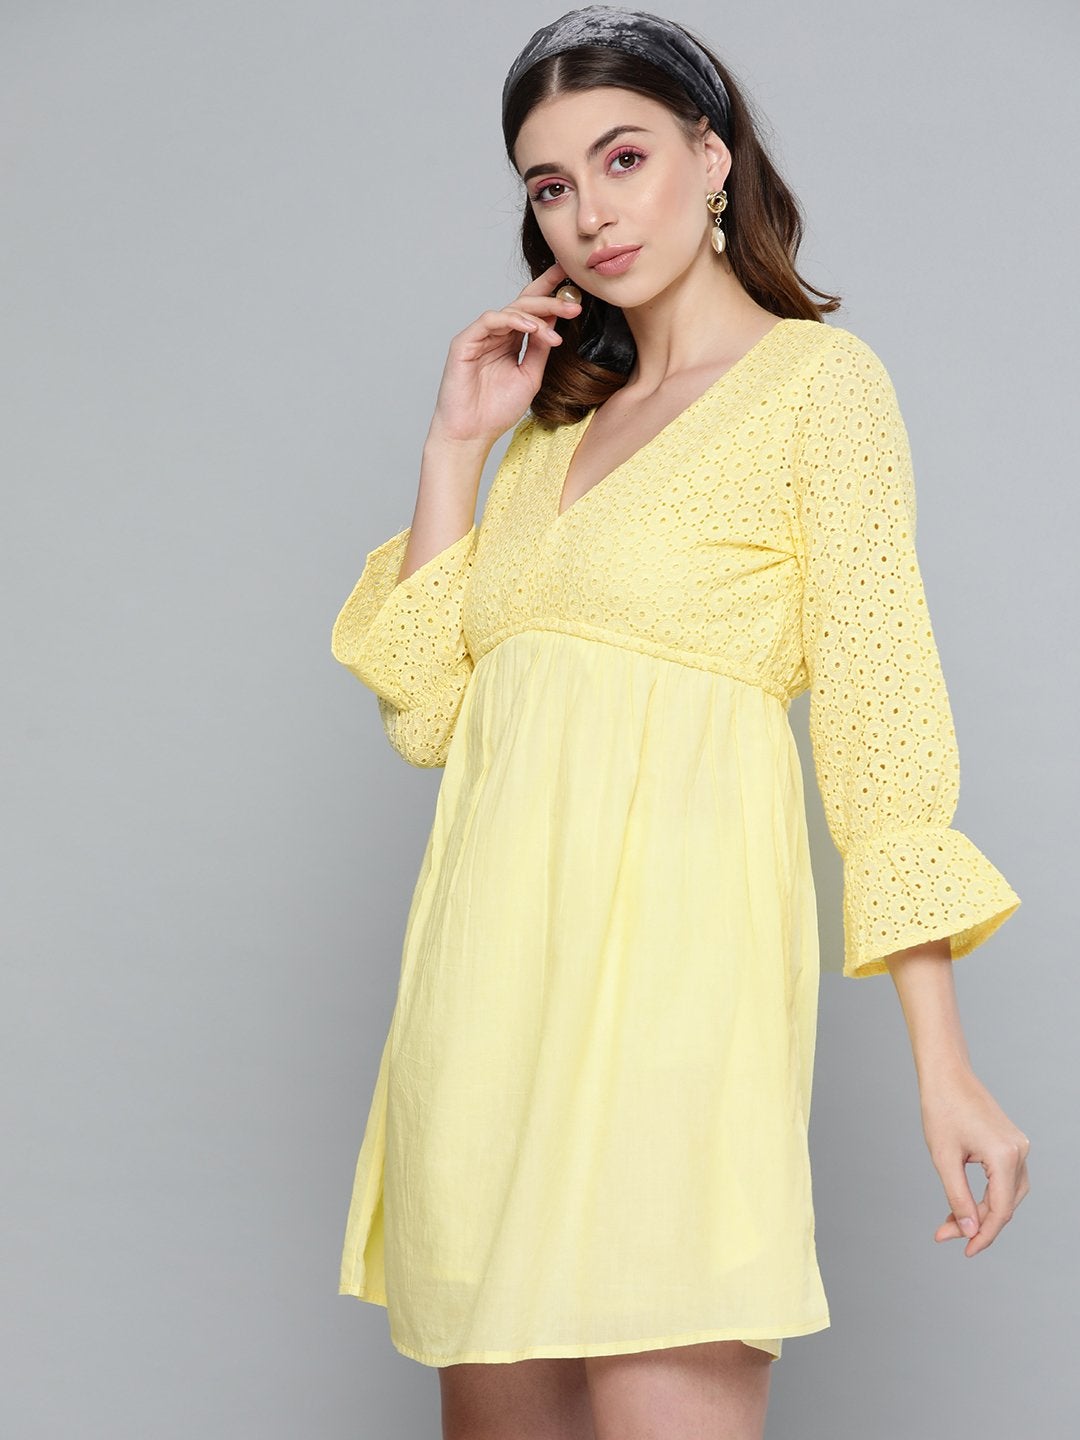 Women's Lemon Yellow Schiffli Shift Dress - SASSAFRAS